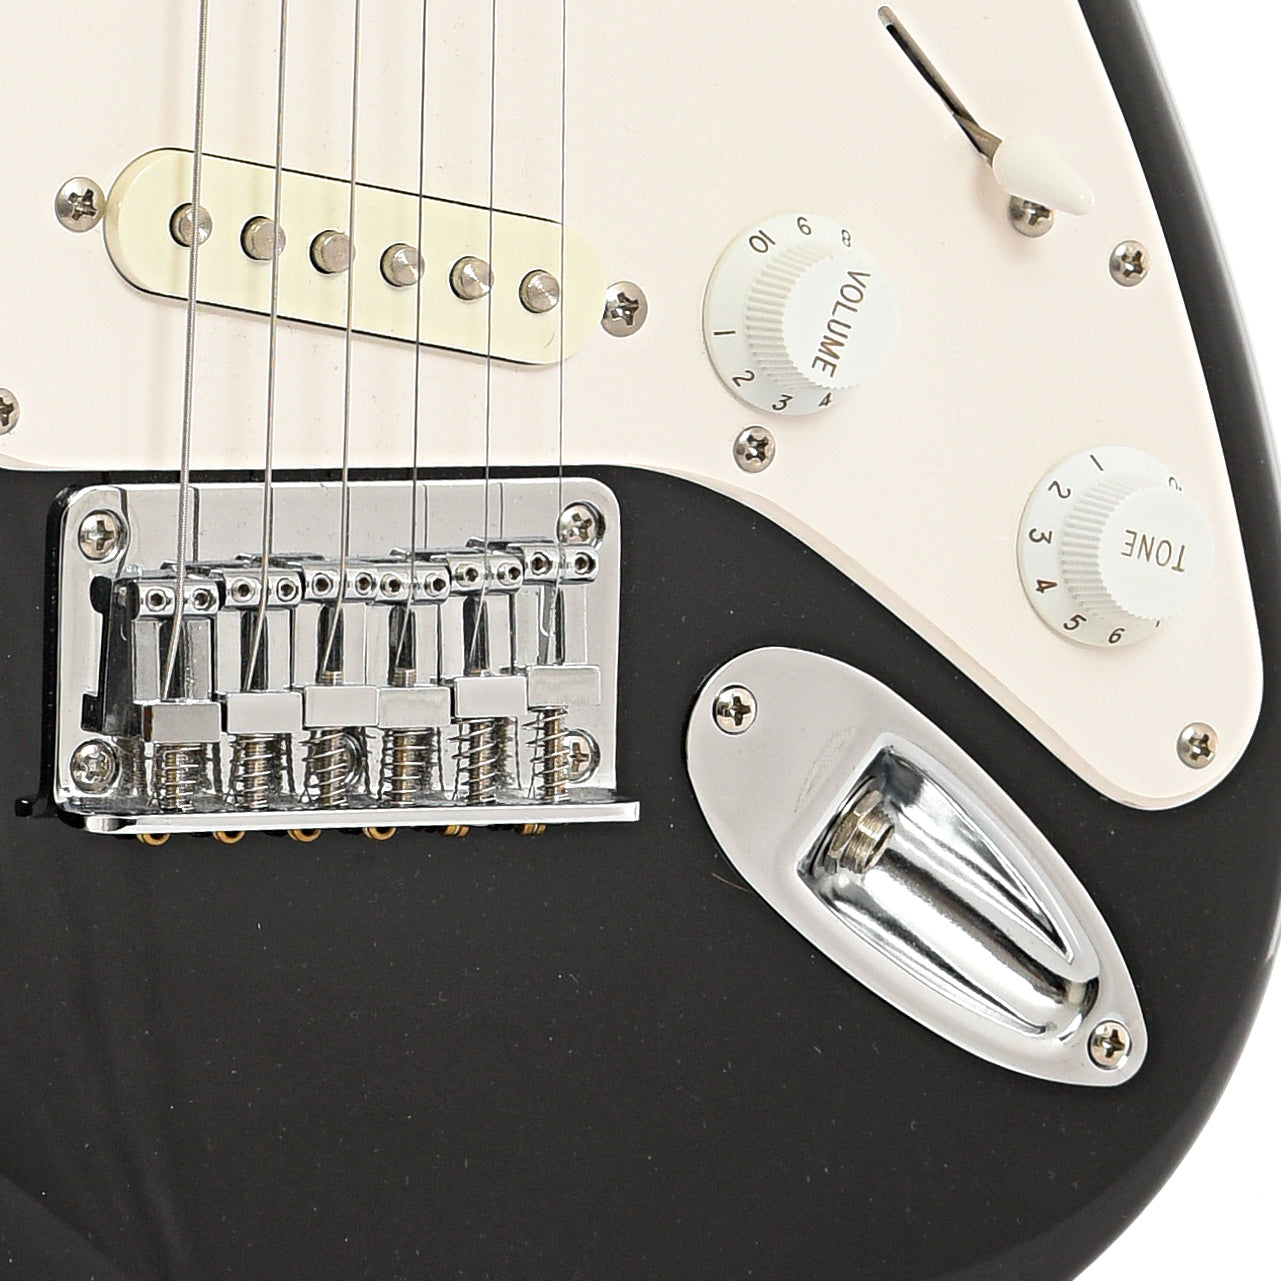 Bridge and controls of Squier Mini Stratocaster Electric Guitar (2016)